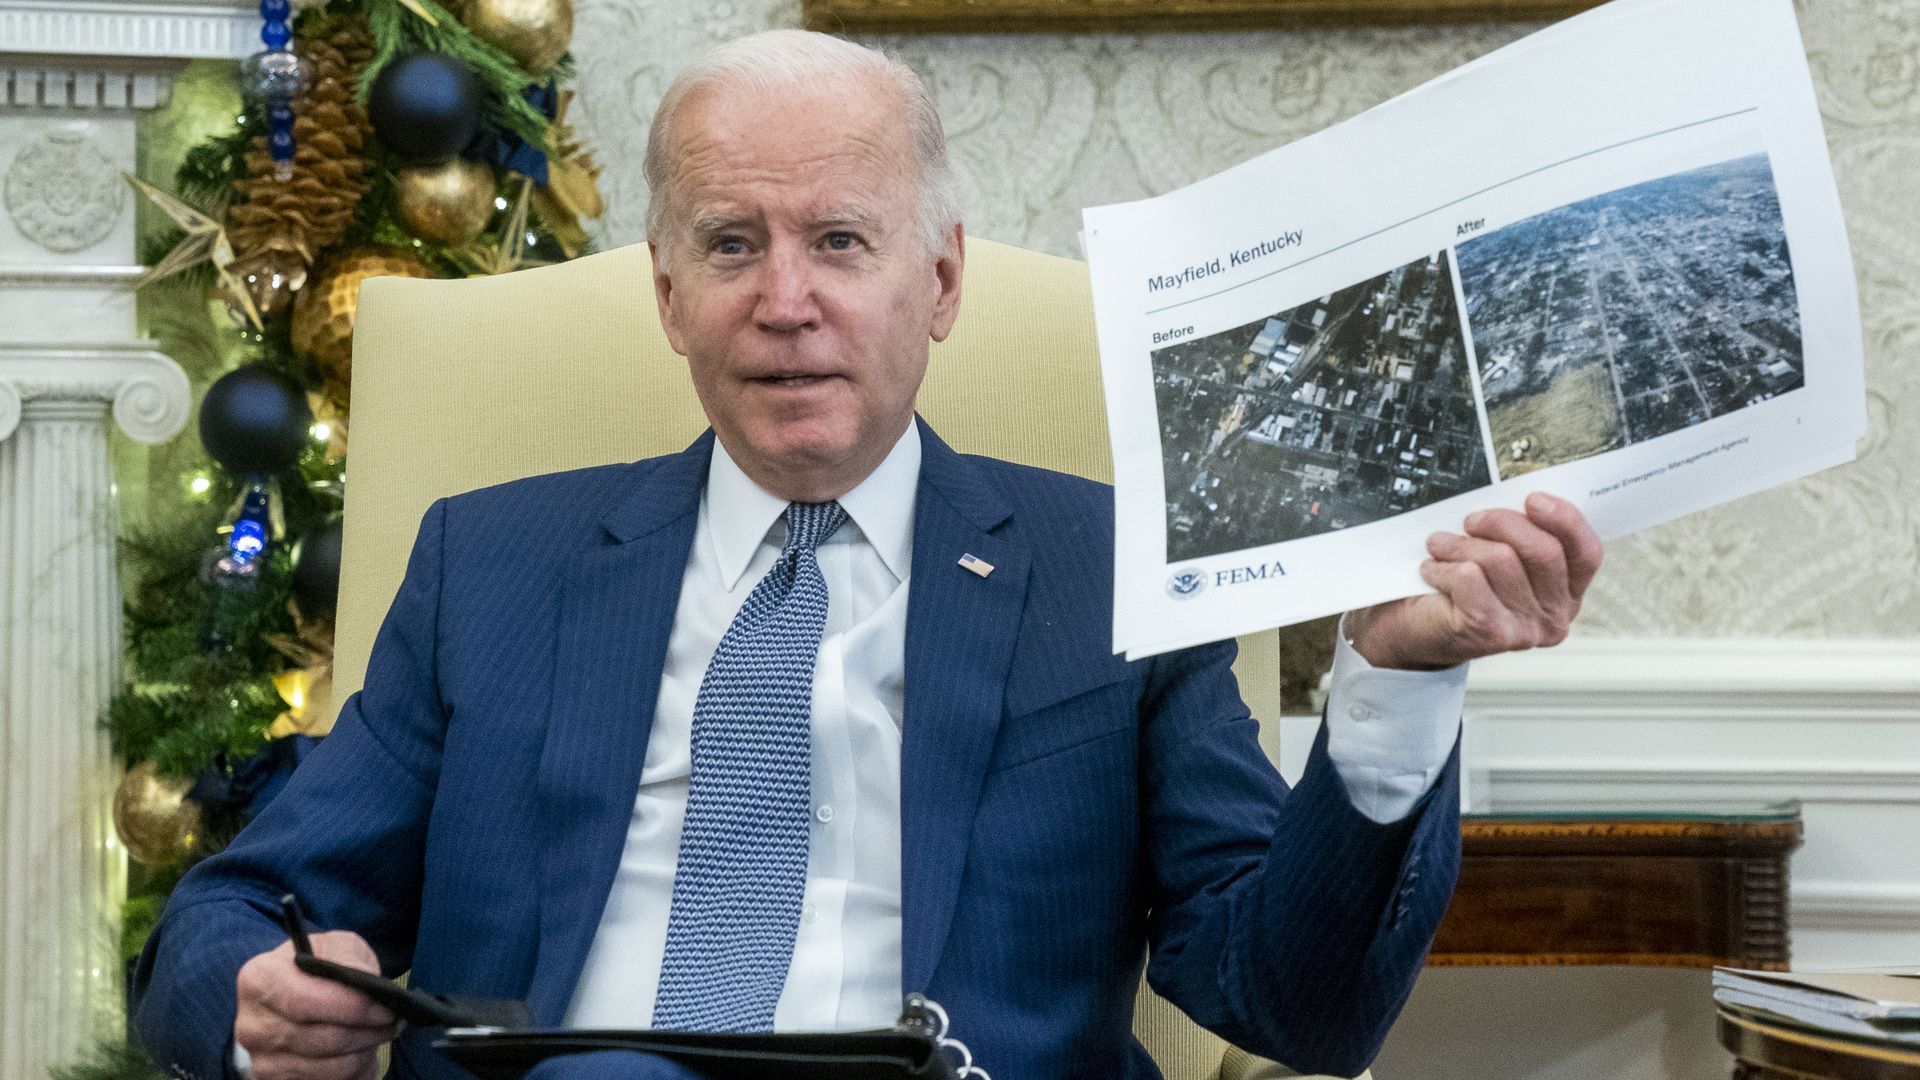 President Biden is seen holding up before and after photos of tornado-stricken Mayfield, Kentucky.